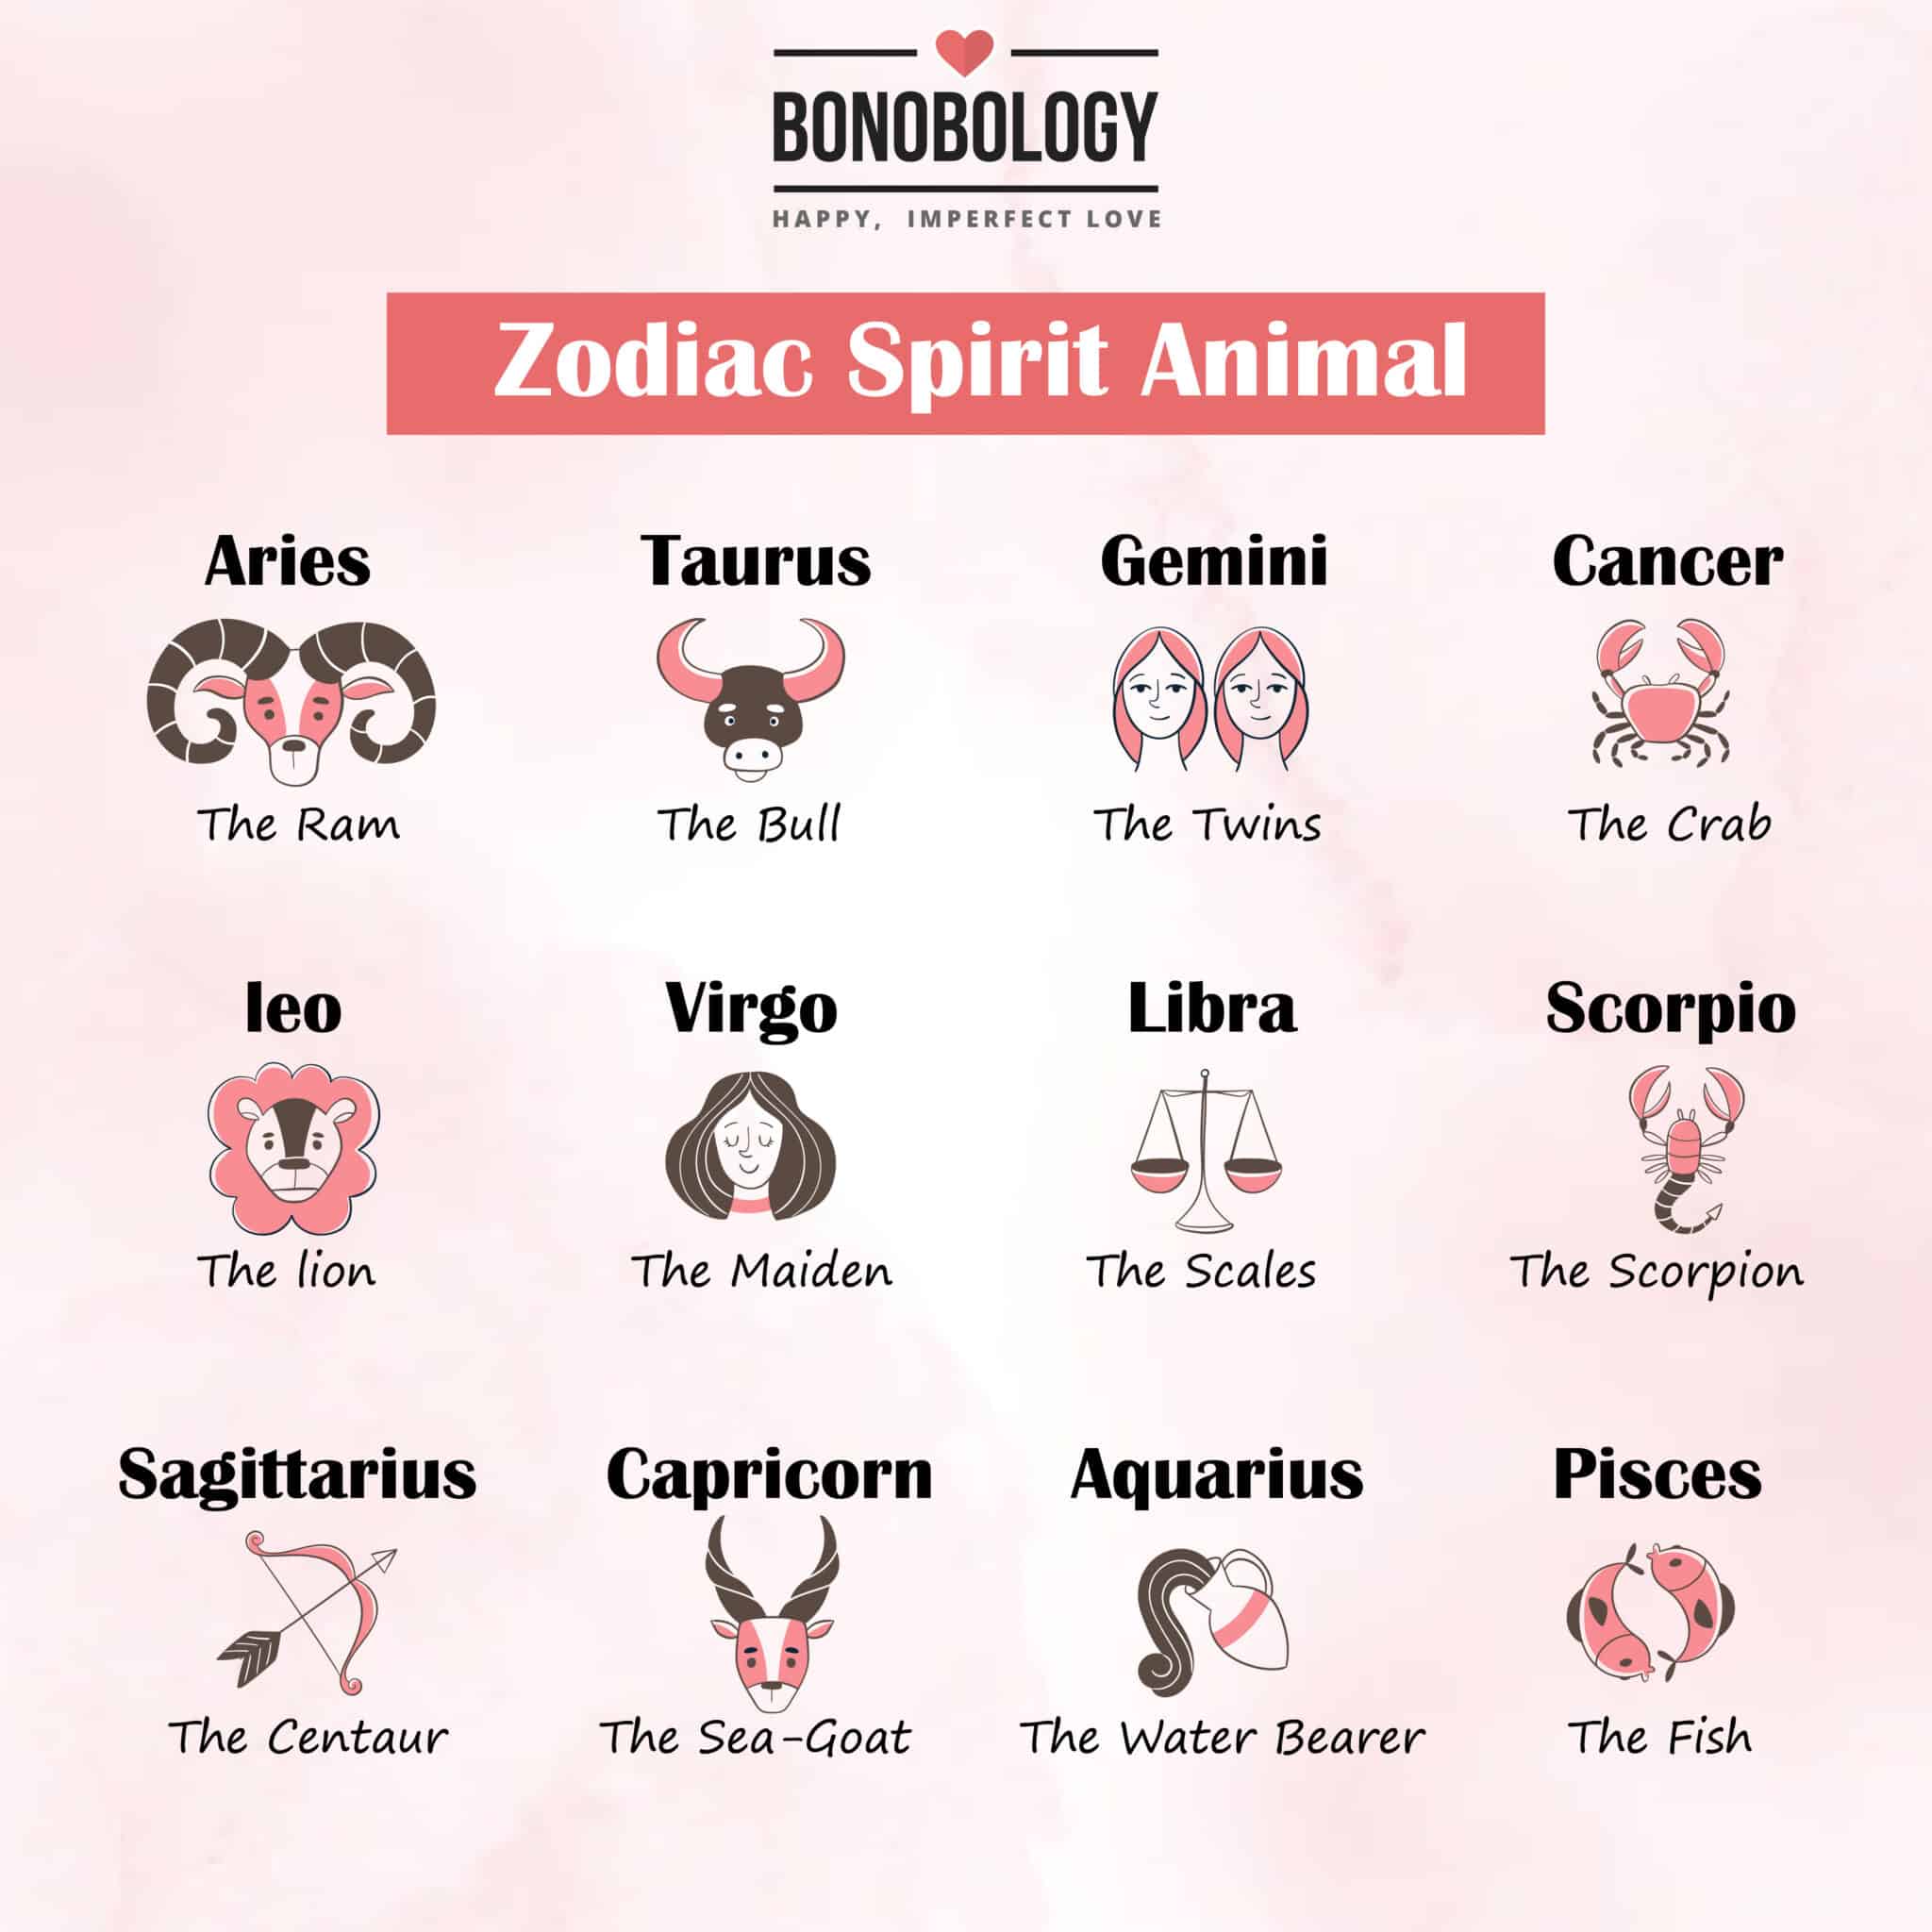 Infographic on Zodiac Spirit Animals